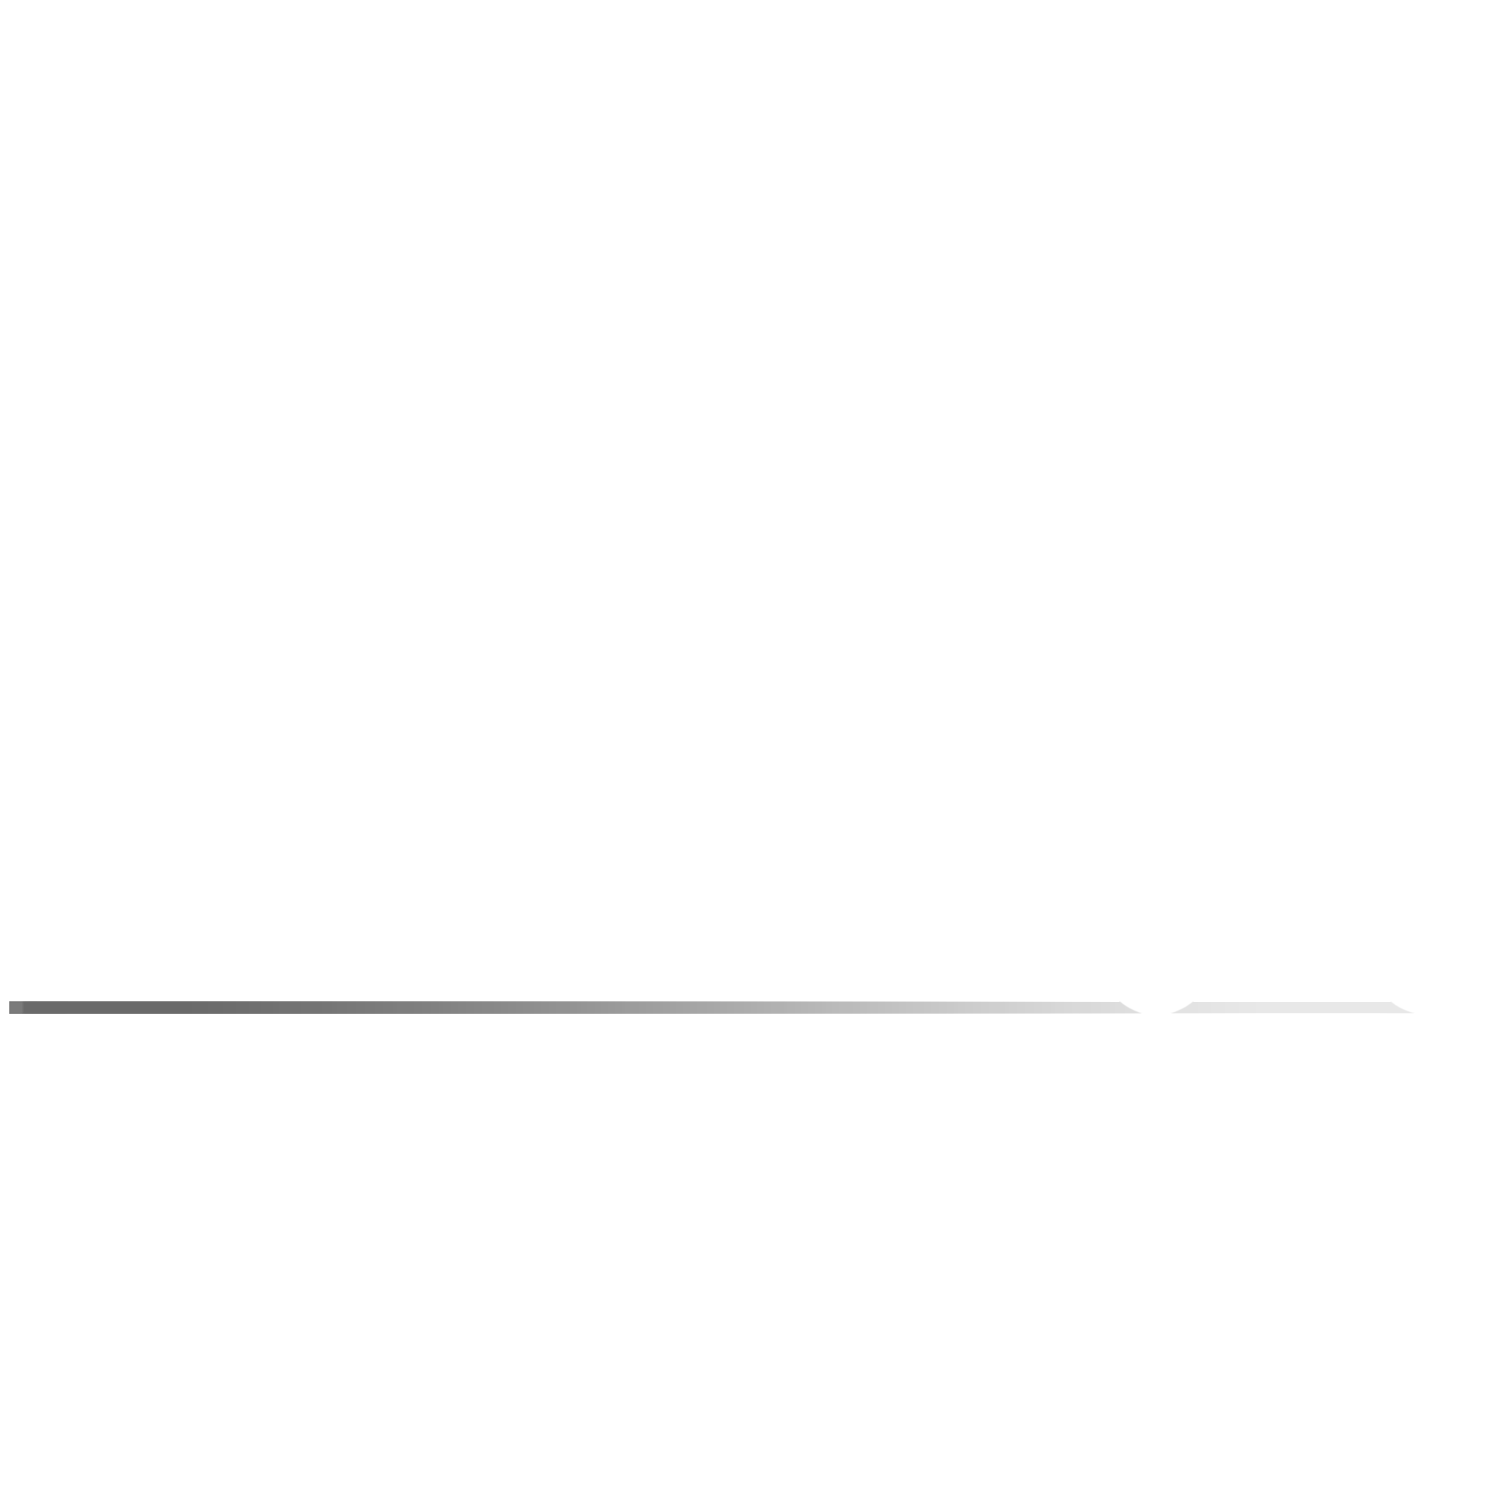 Trevor Hall Motorcycles